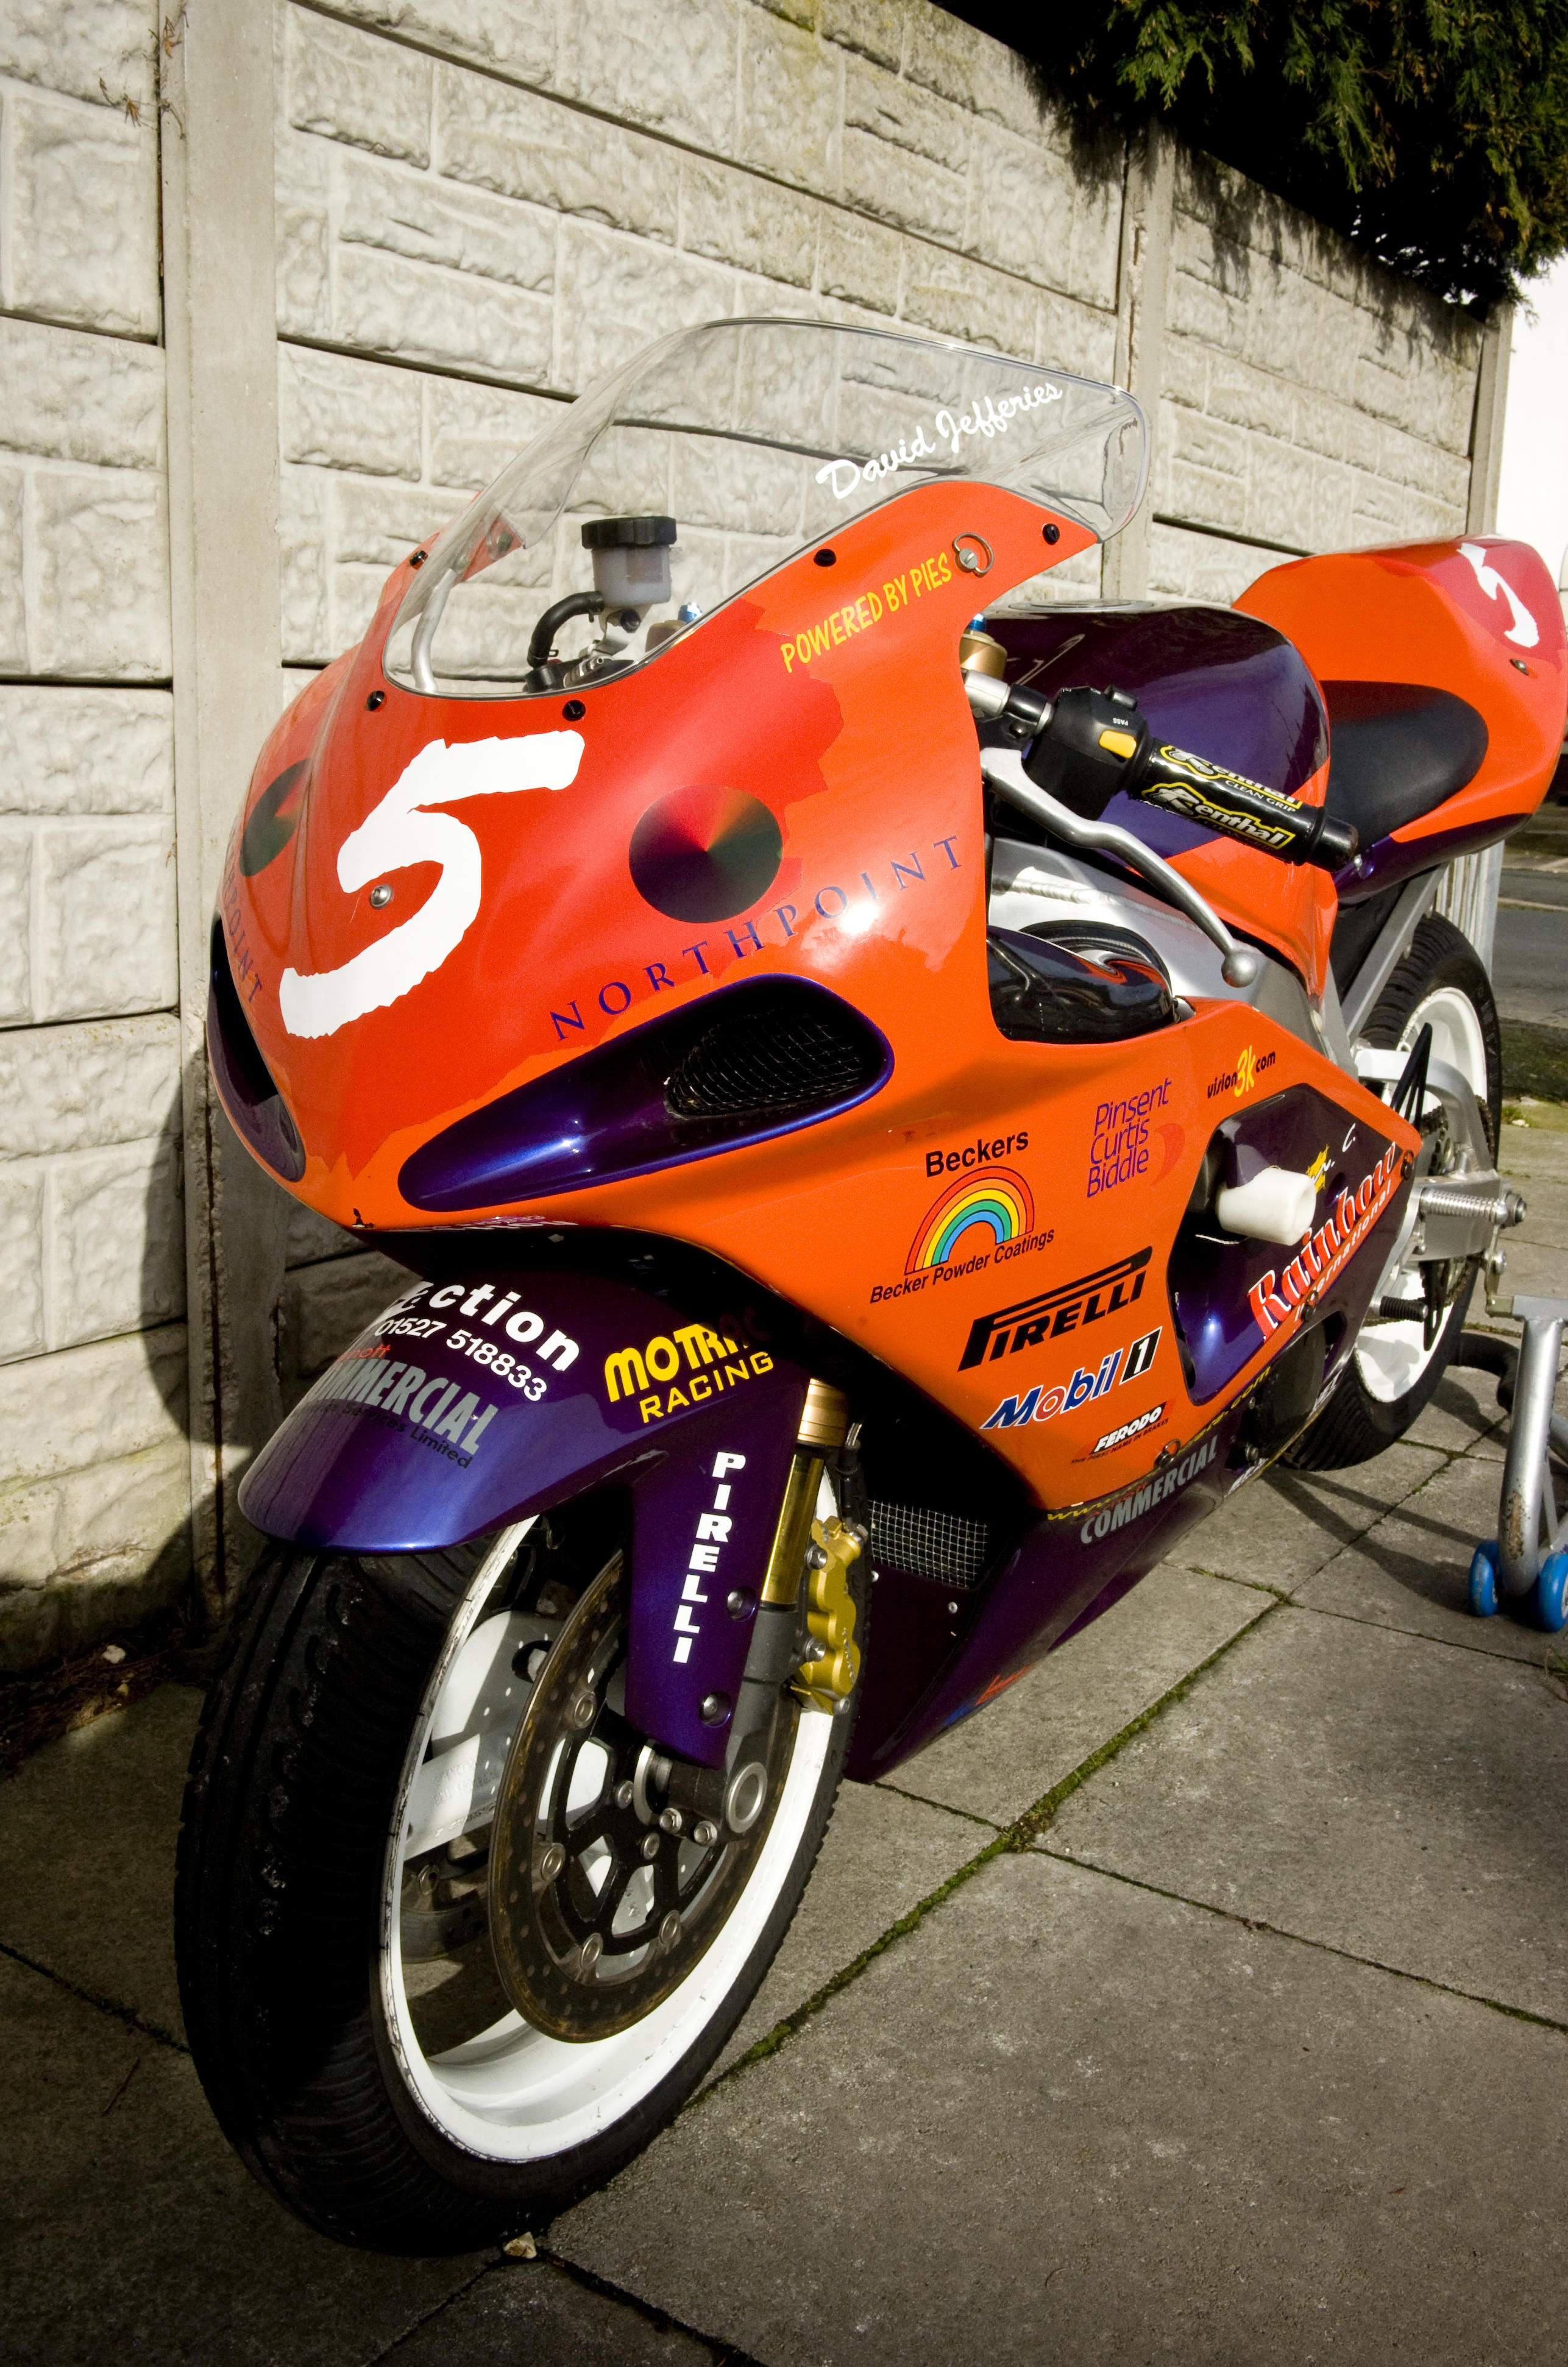 David Jefferies' Superstock bike for sale